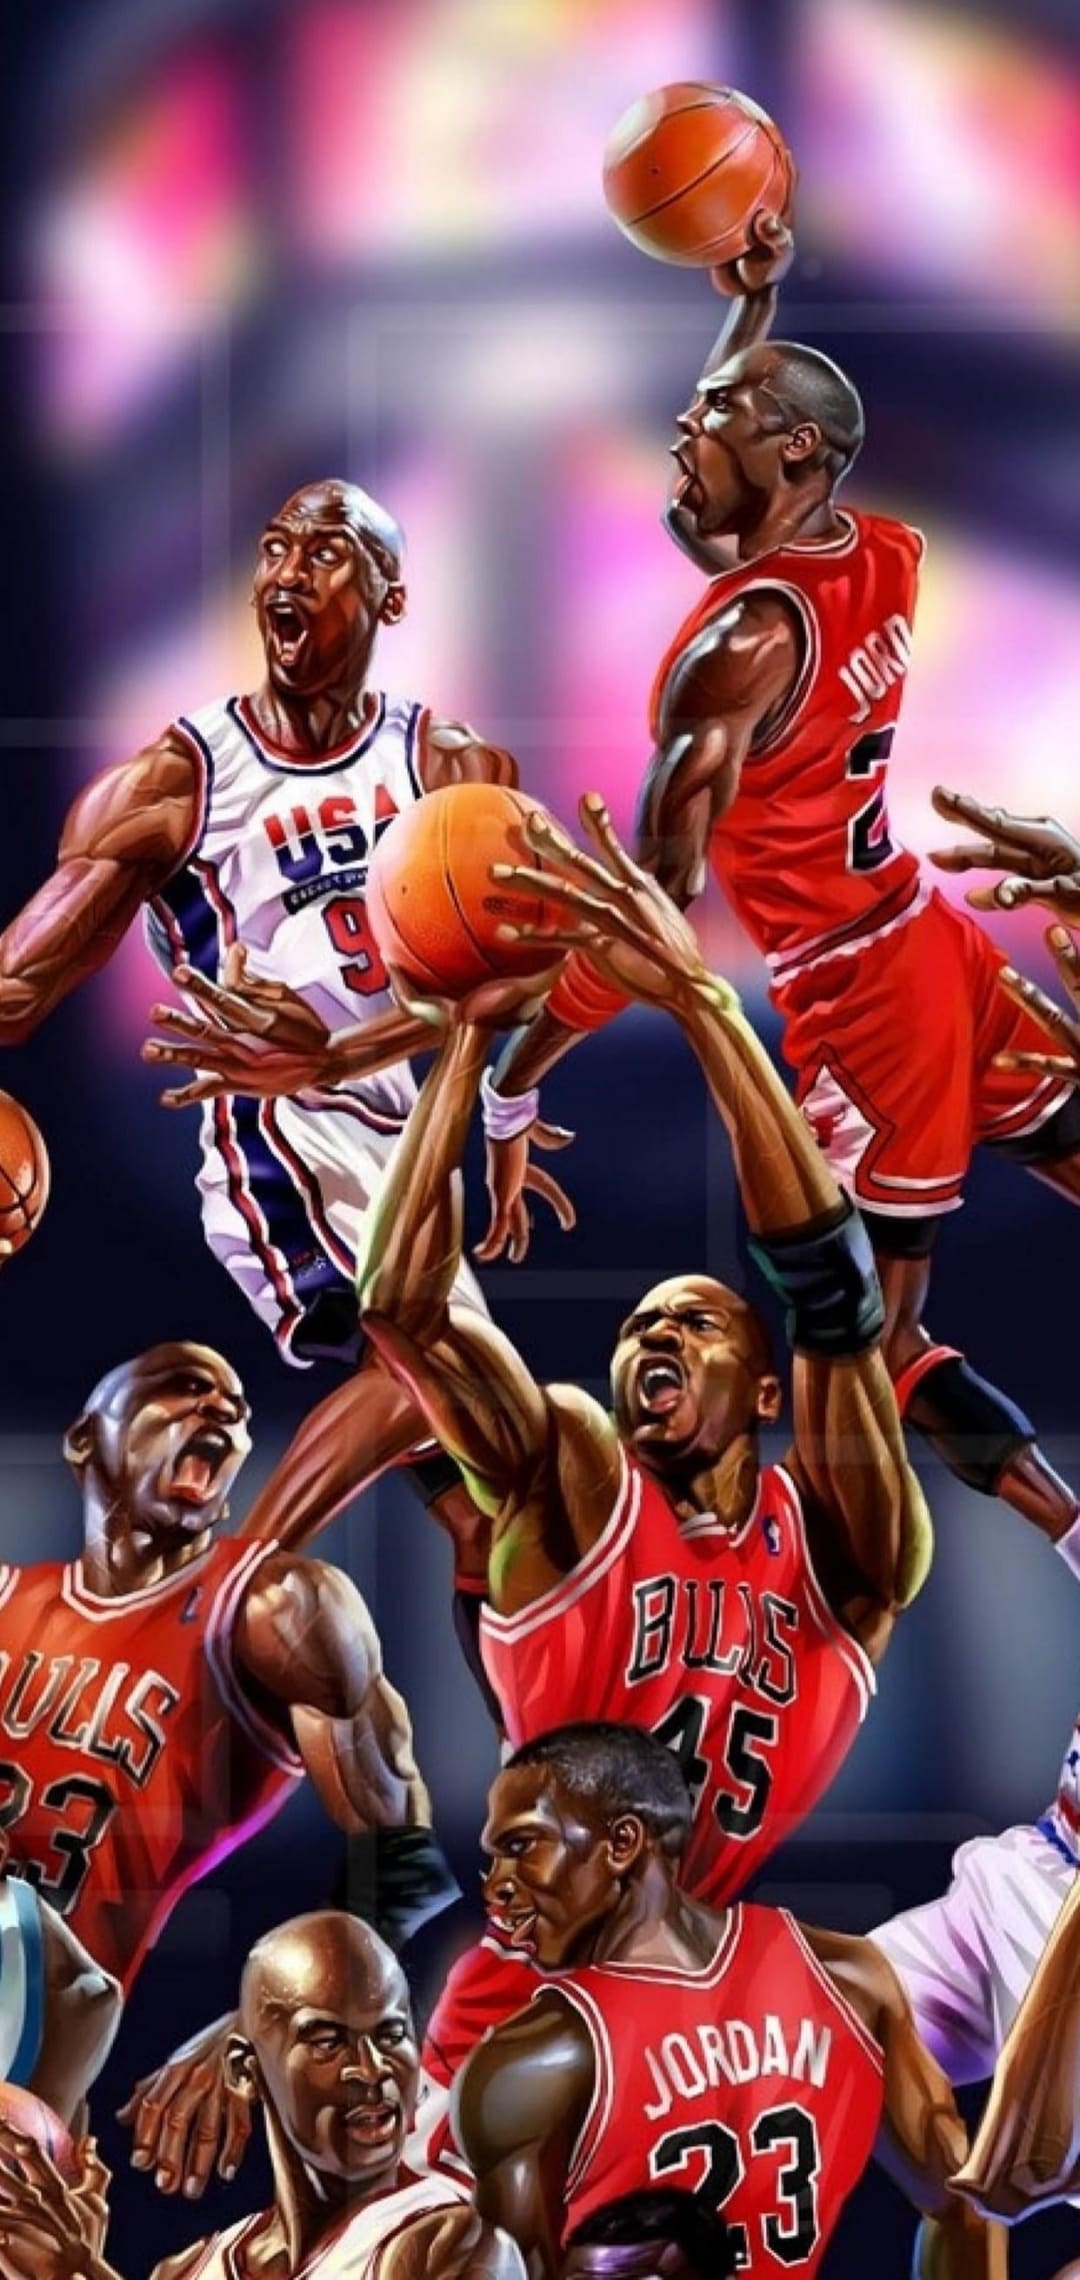 Michael Jordan Background Images